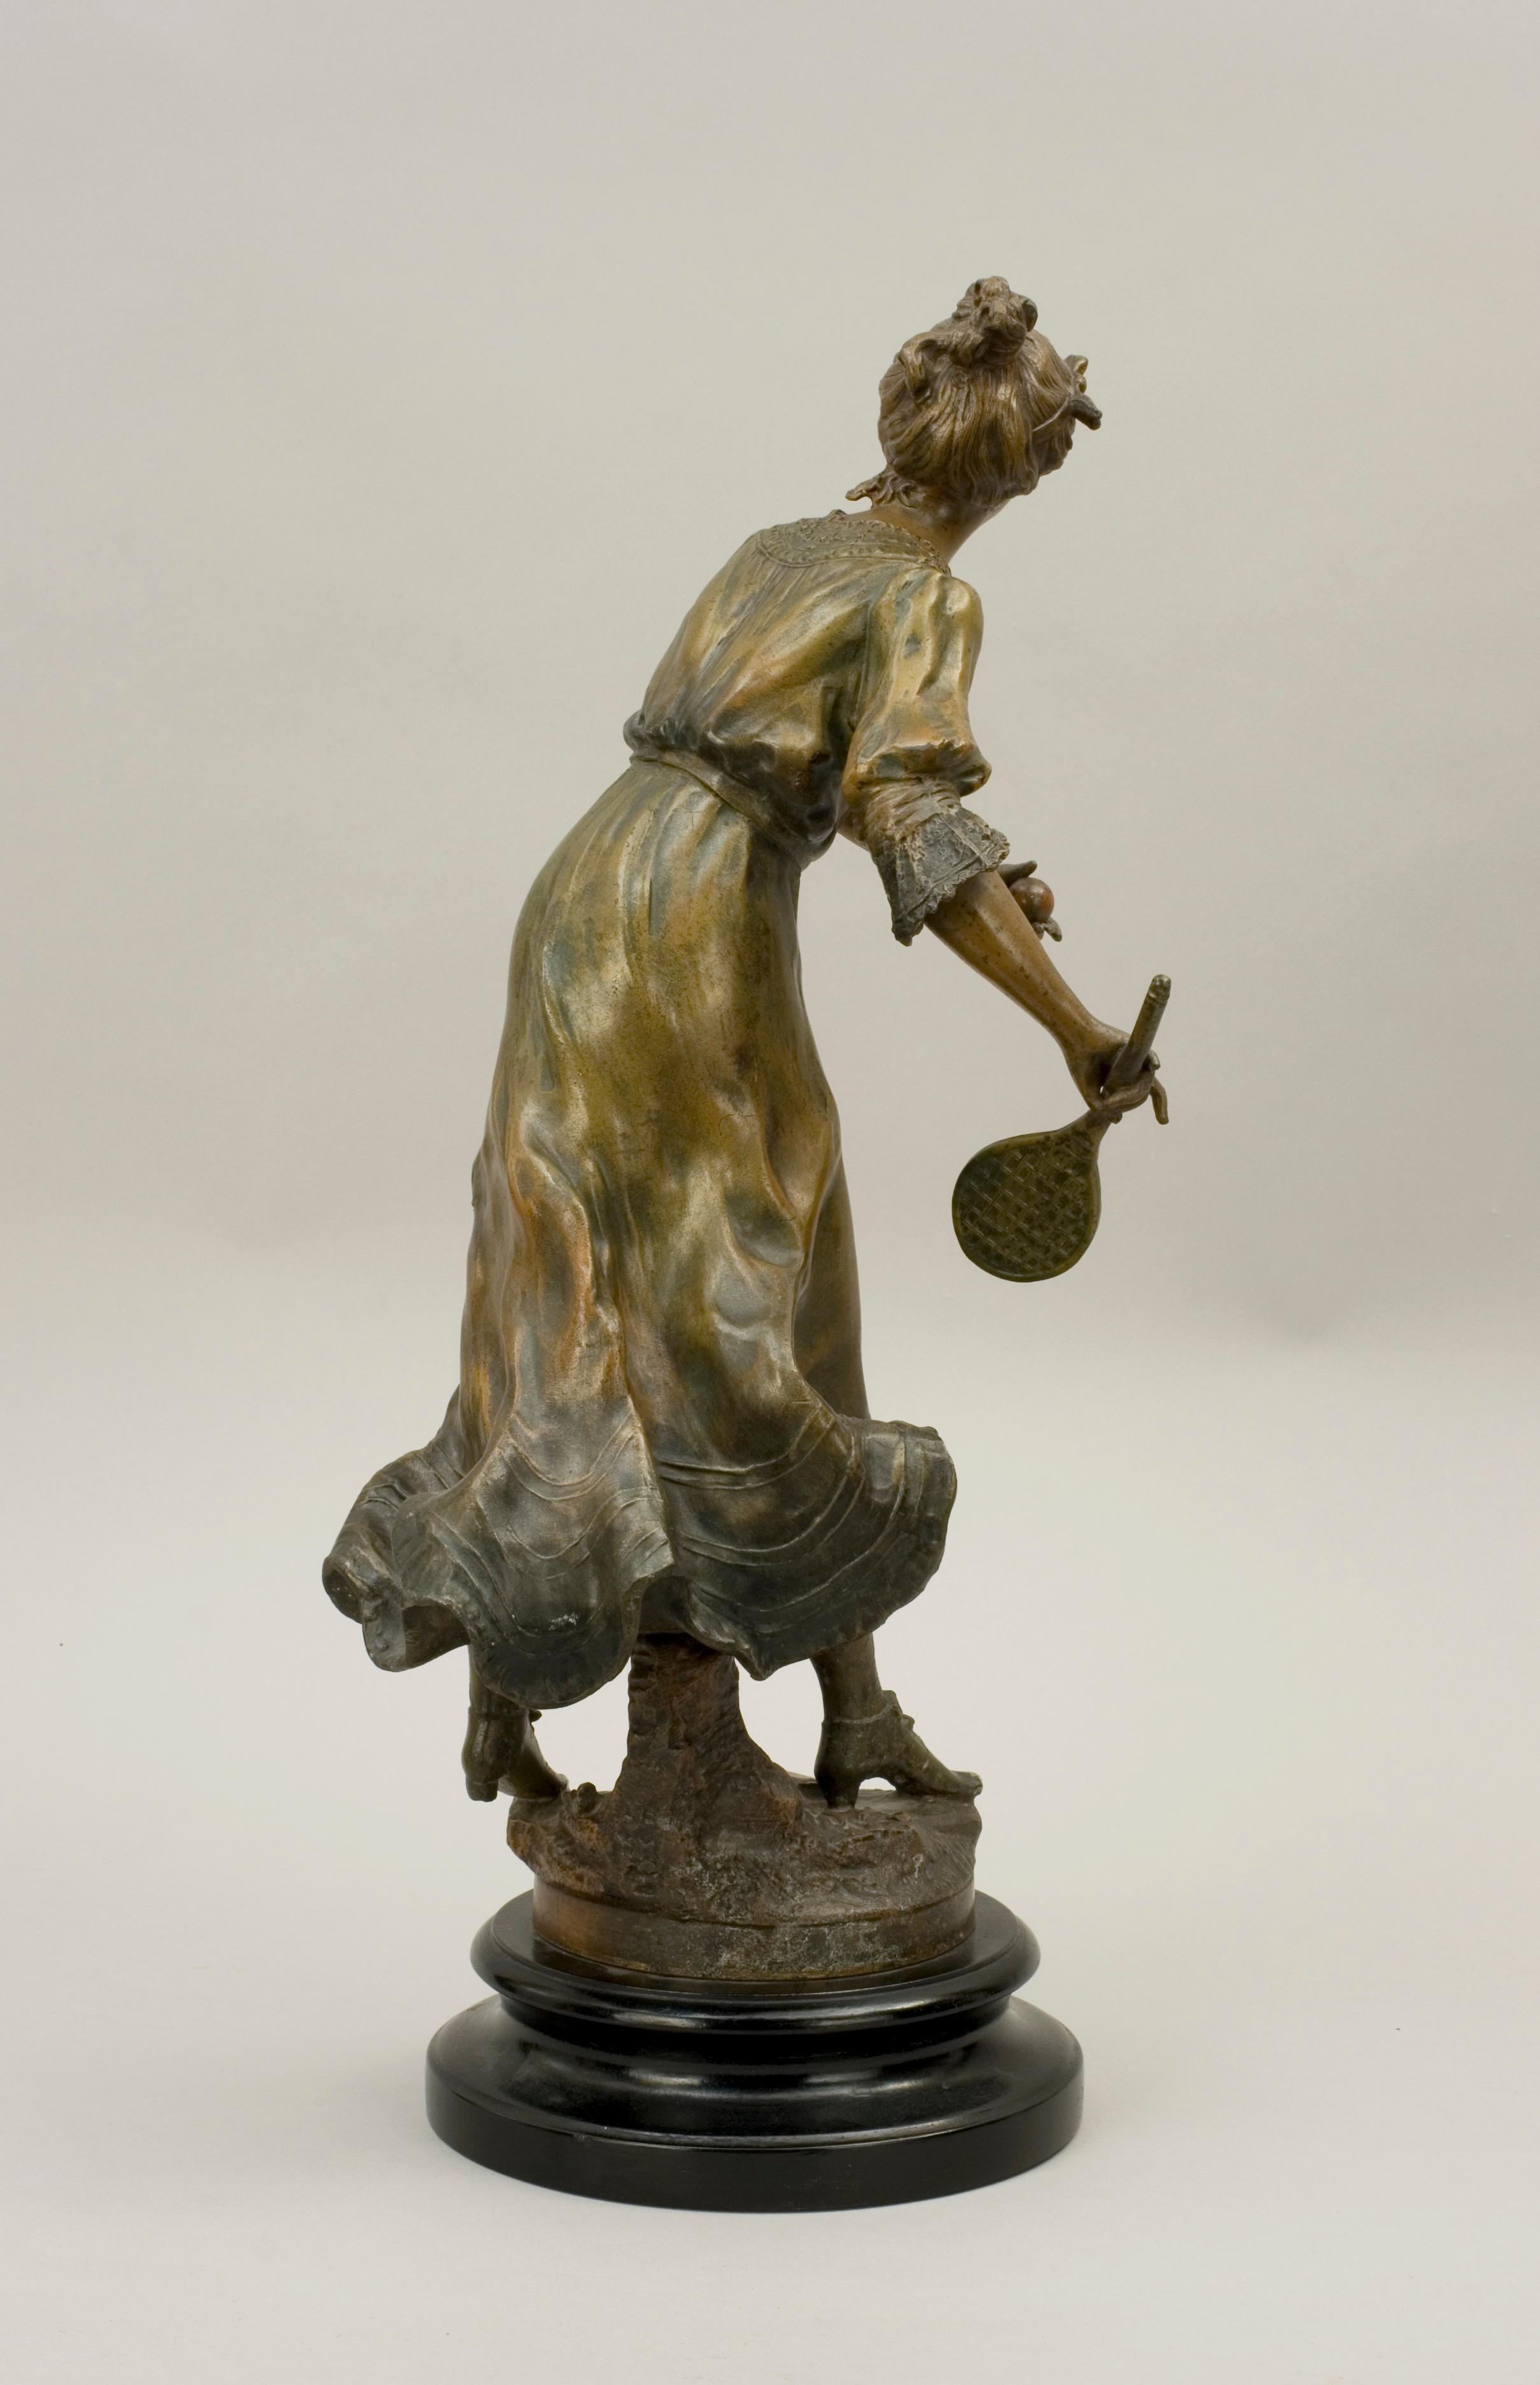 Sporting Art Pair of Antique Louis Moreau Spelter Tennis Figures, Bronze Sculptures